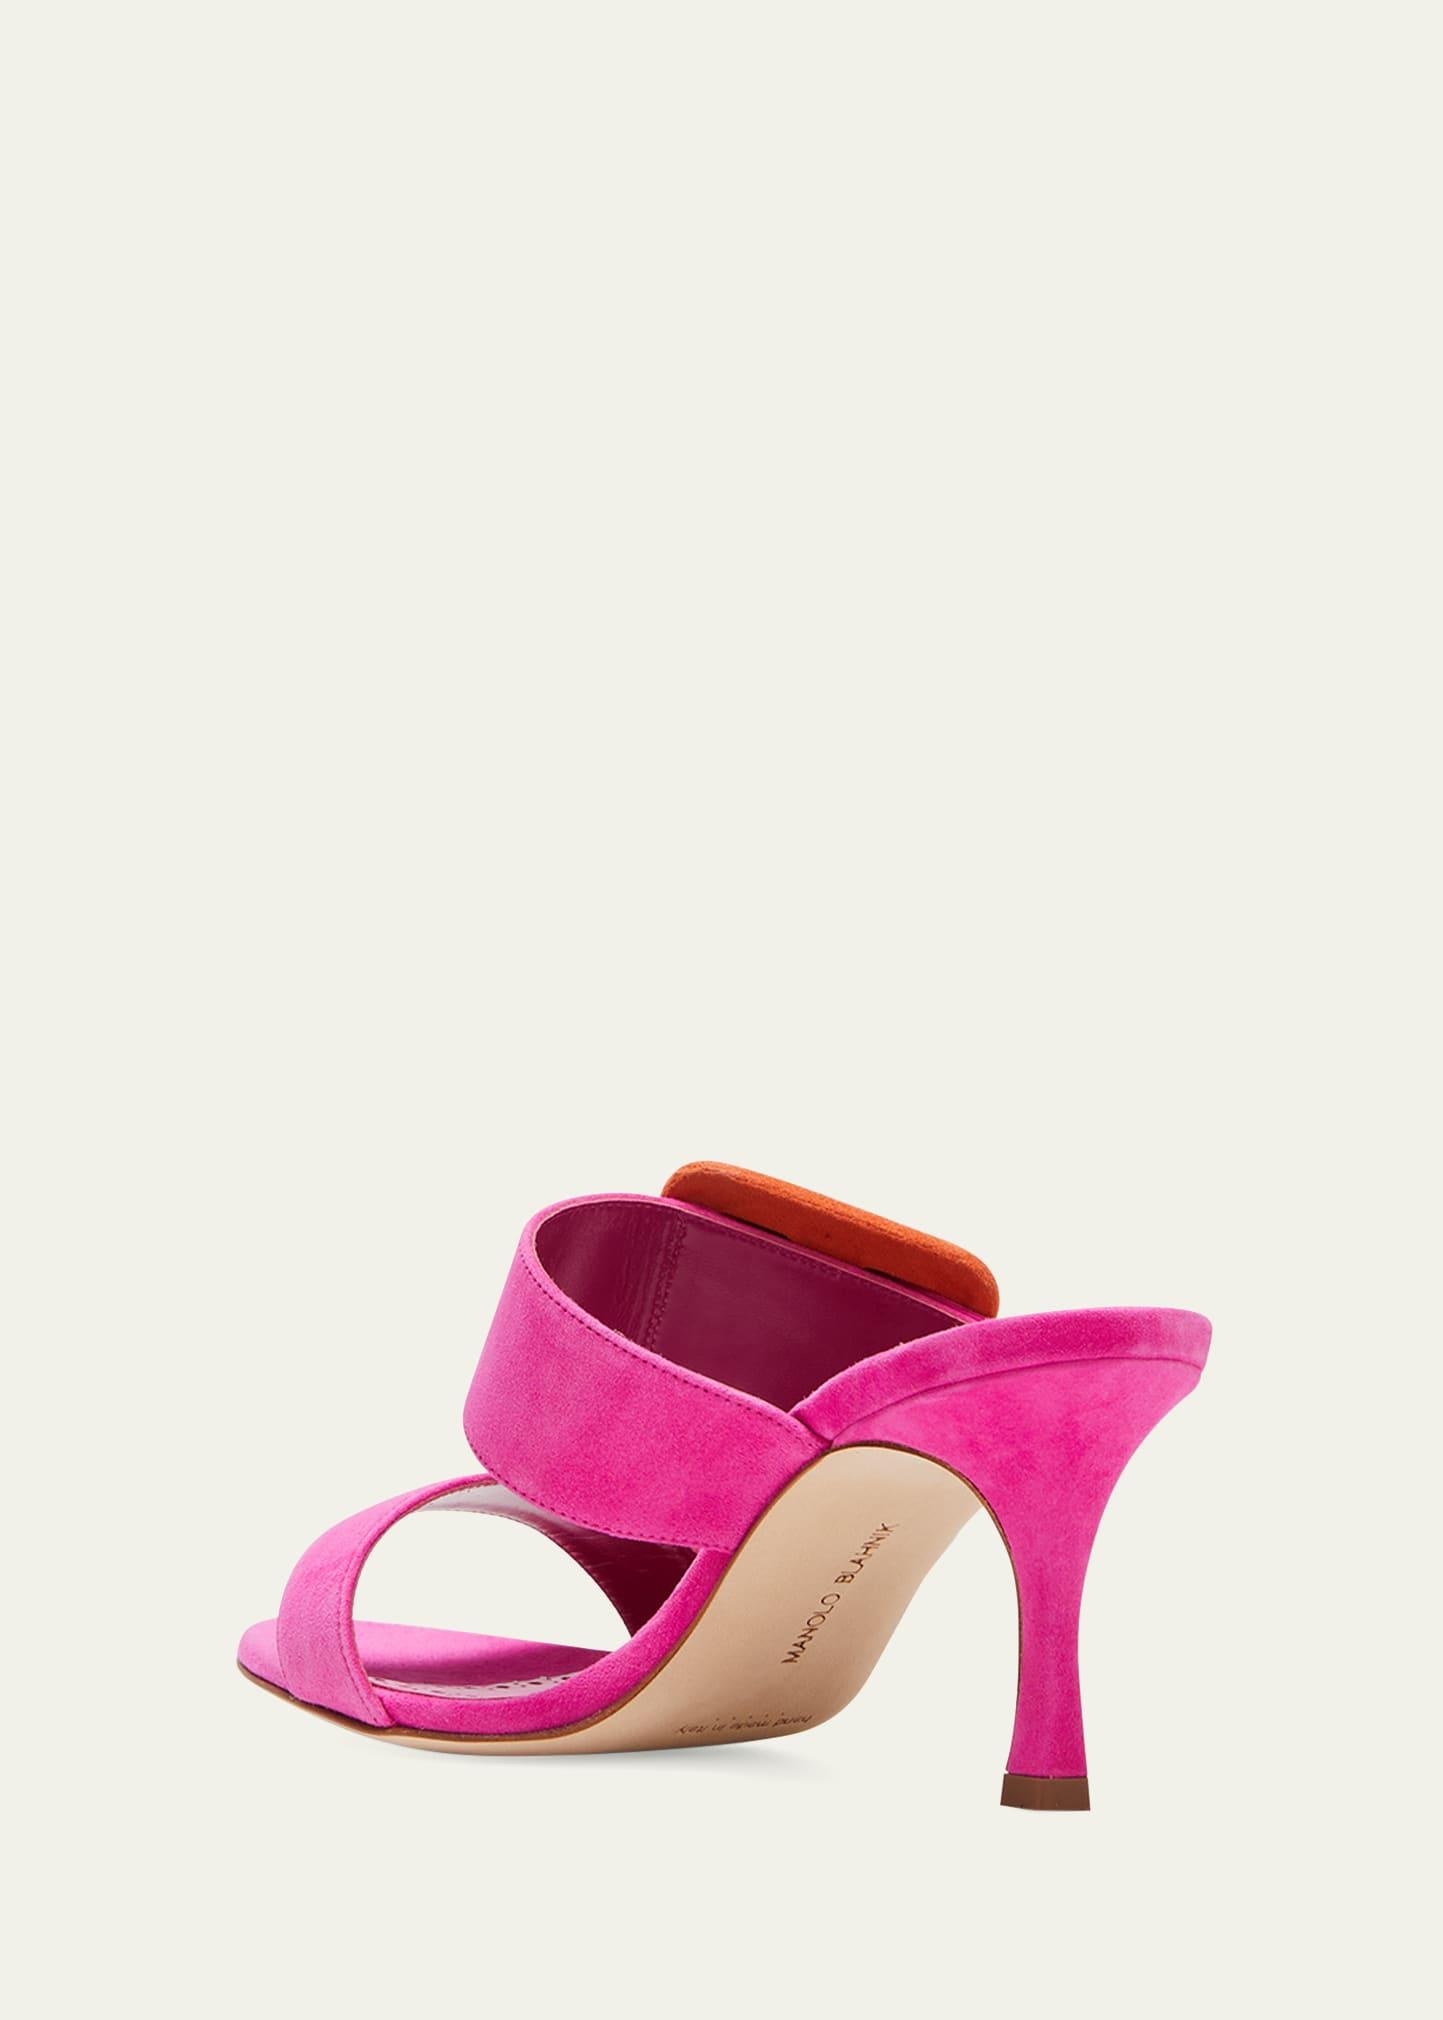 Manolo Blahnik Gable 70mm Bicolor Suede Buckle Sandals in Pink | Lyst